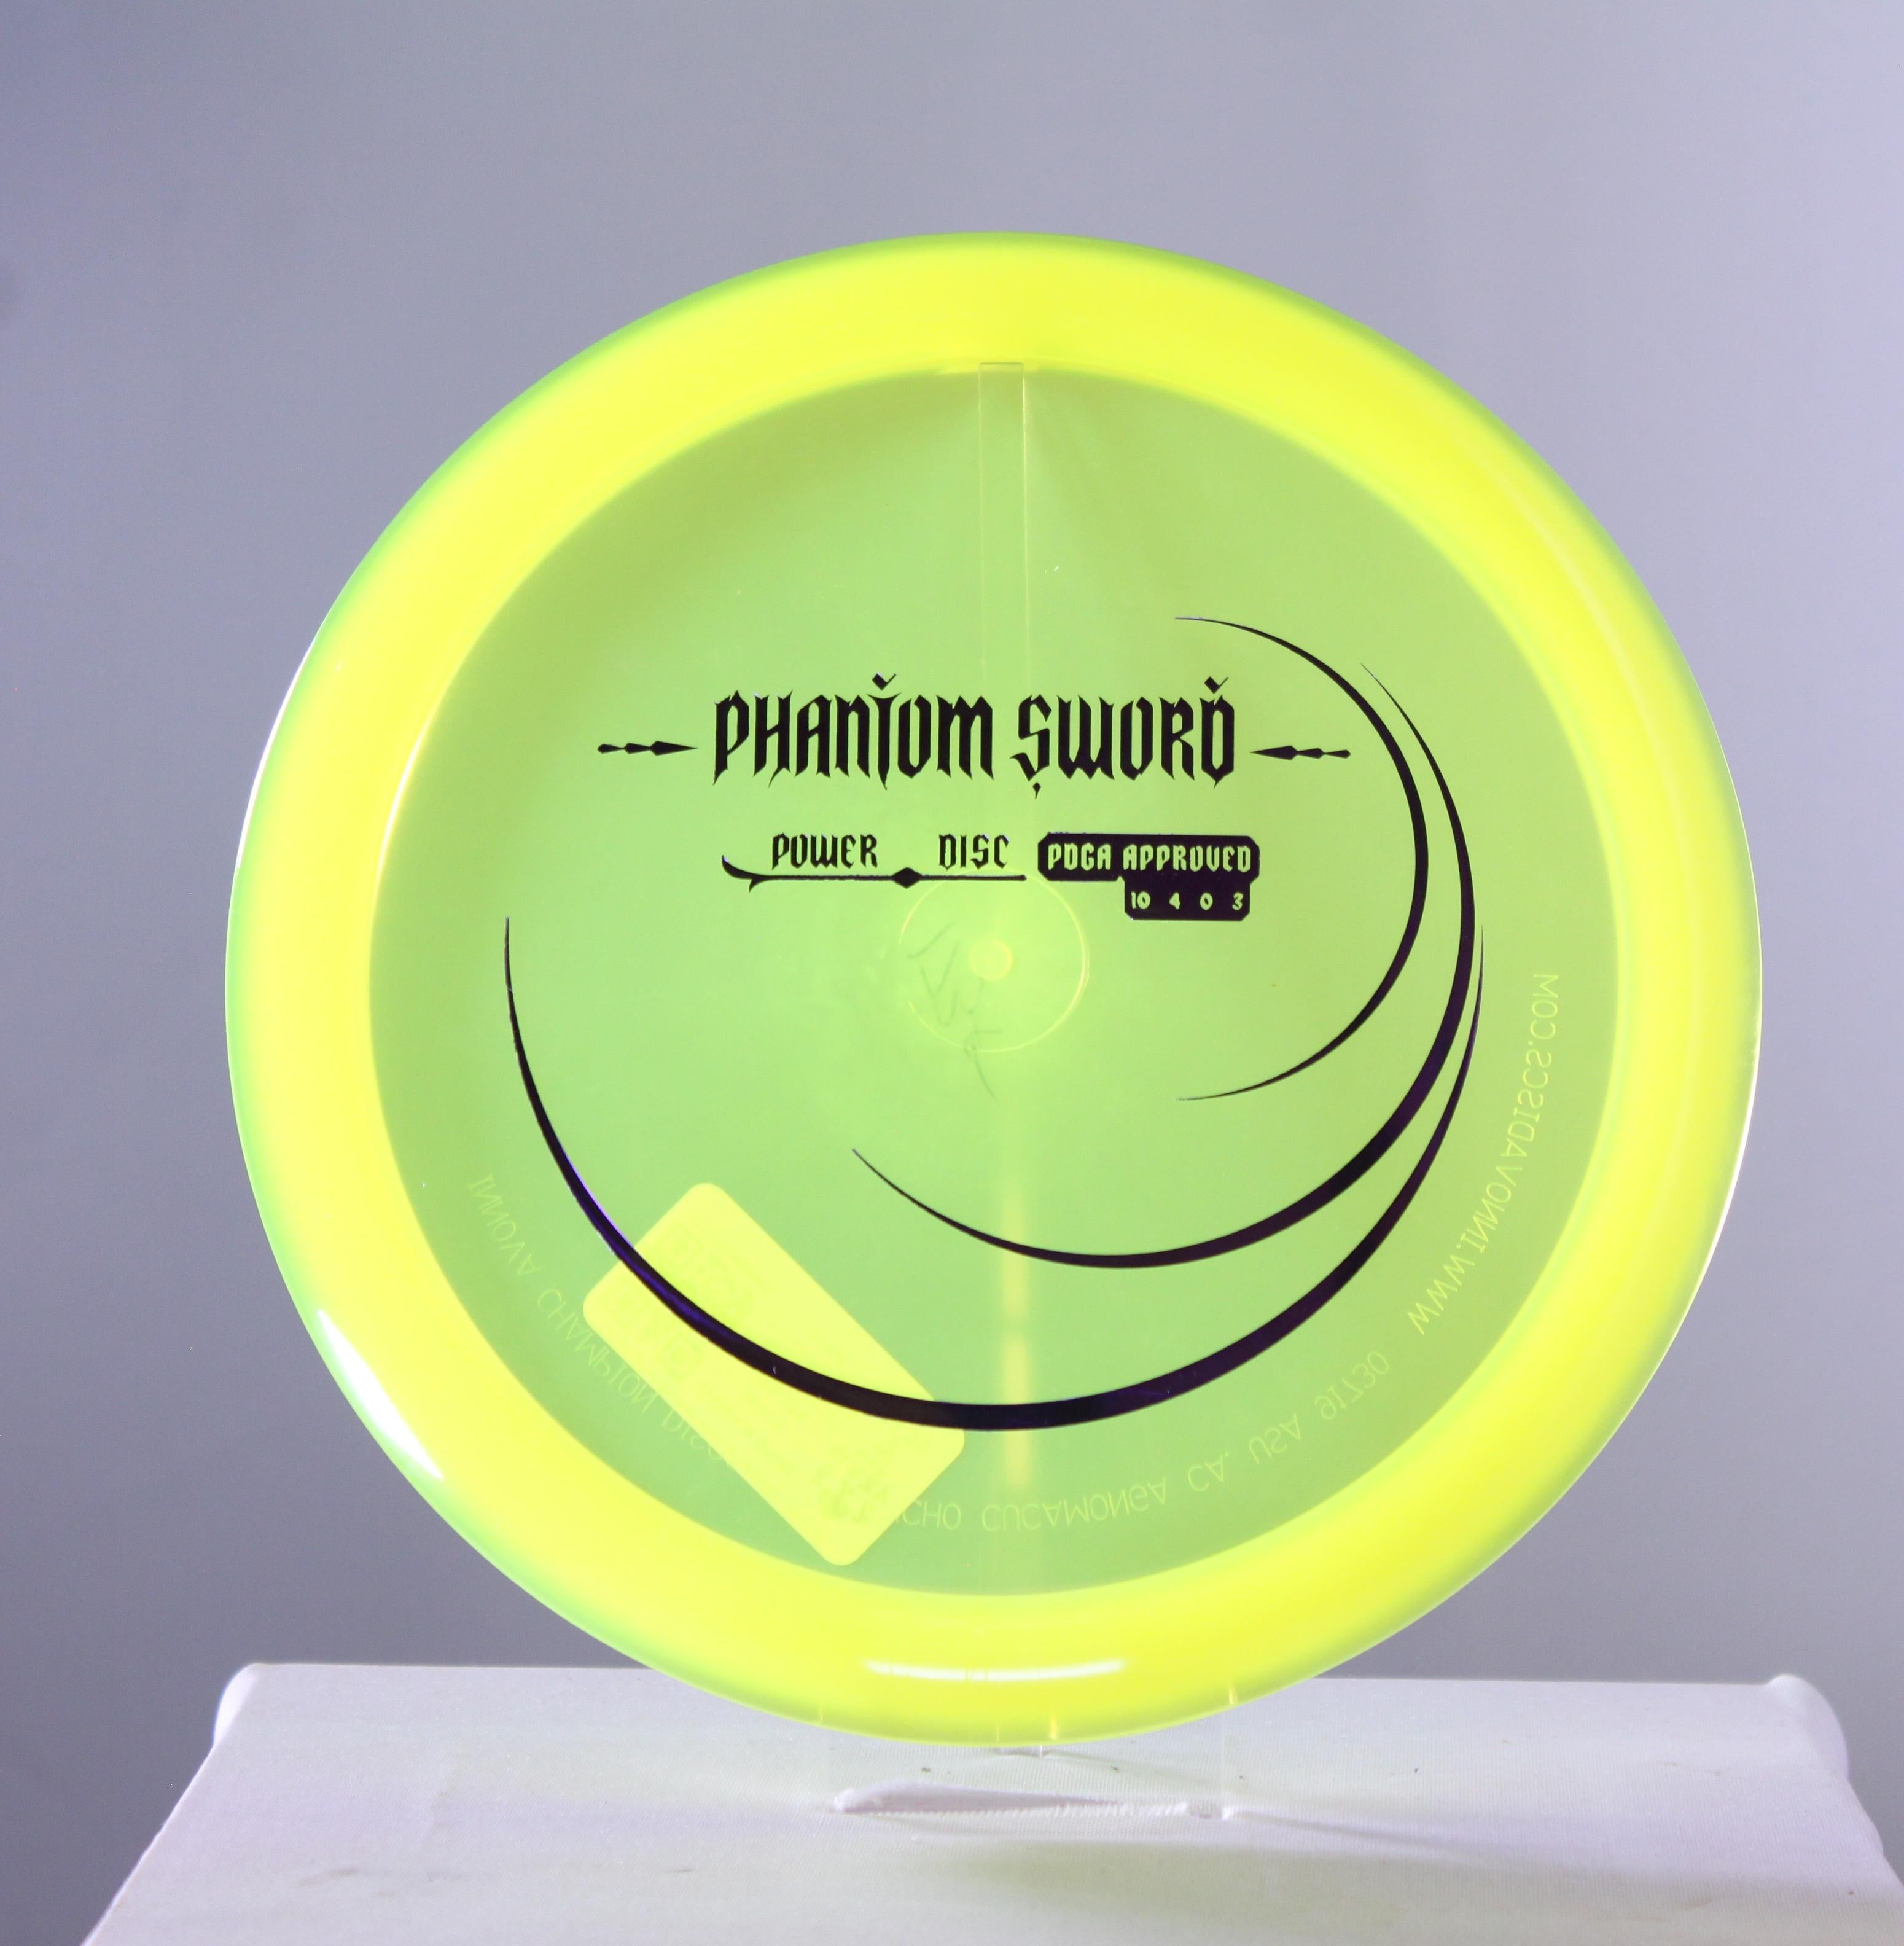 Champion Power Disc (Phantom Sword)